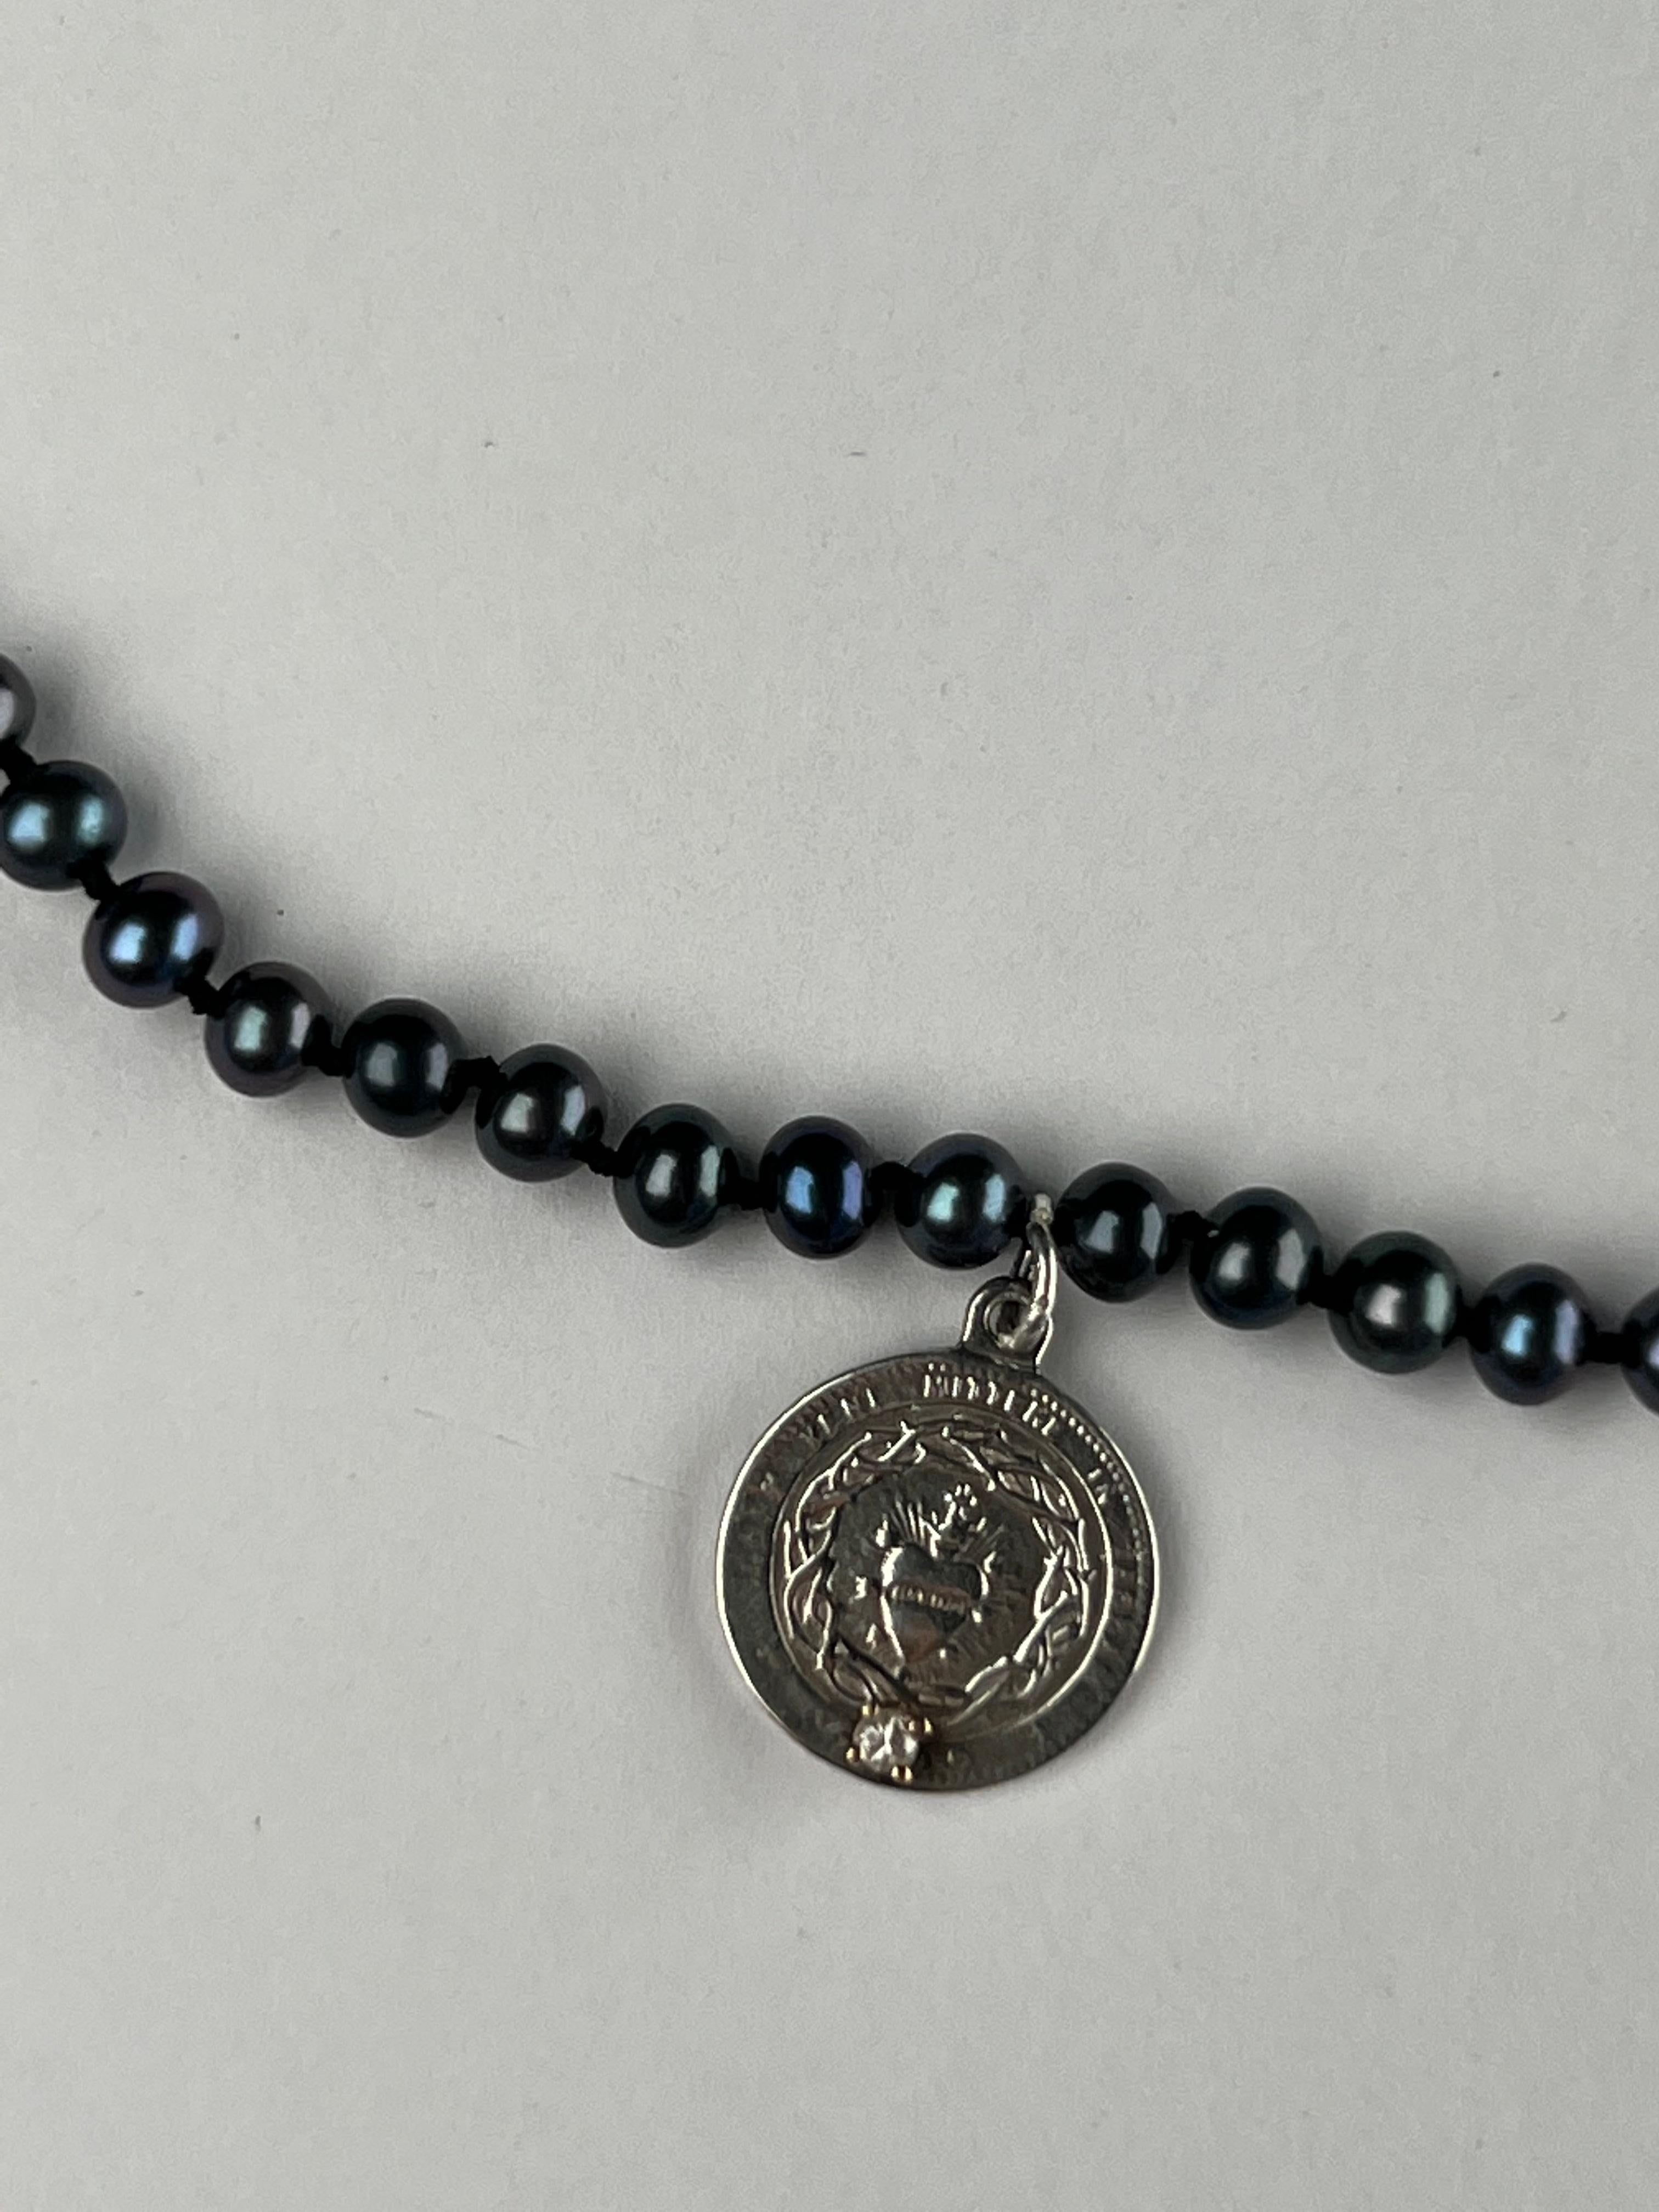 Diamond Silver Heart Medal Black Pearl Necklace Choker J Dauphin For Sale 1